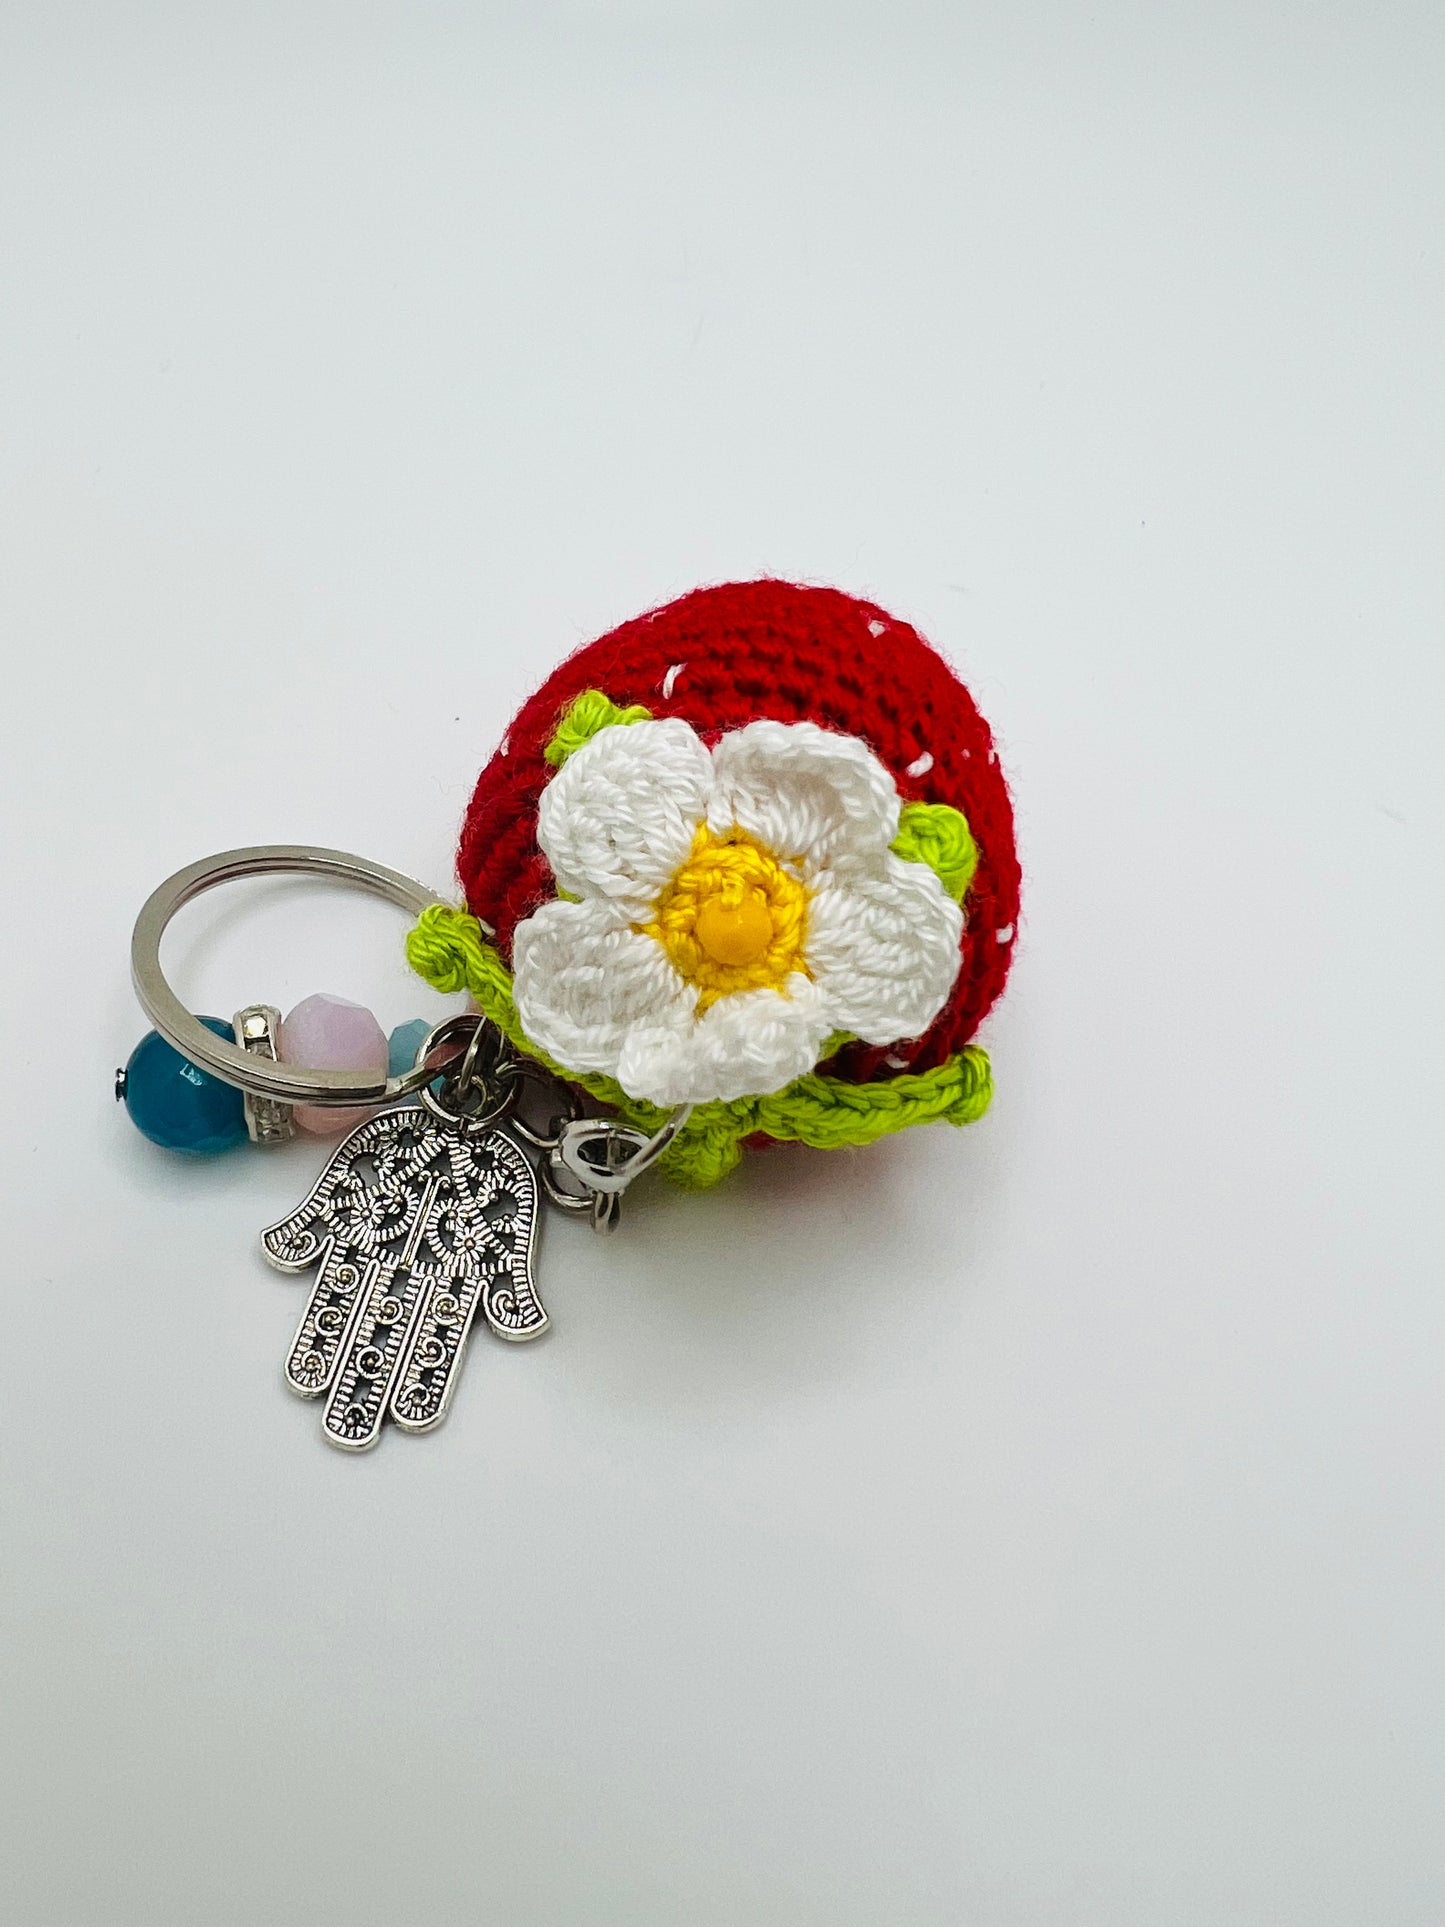 Stuffed Strawberry  Keychain - Crochet Knitted Amigurumi Toy